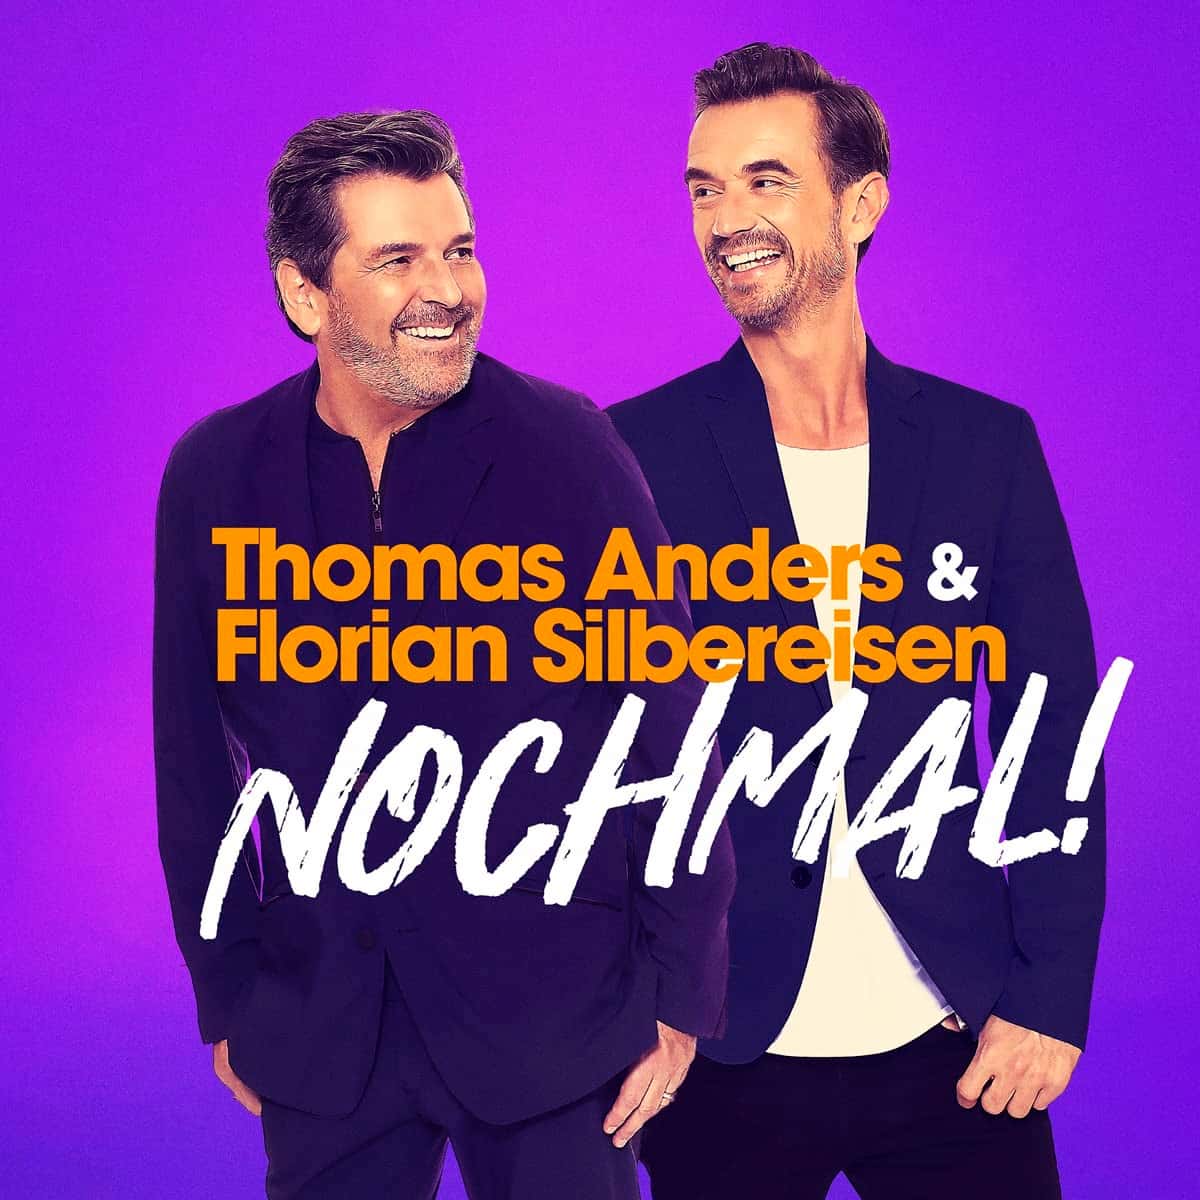 Florian Silbereisen & Thomas Anders CD 2023 “Nochmal!” - hier im Bild das CD-Cover mit Thomas Anders und Florian Silbereisen darauf abgebildet